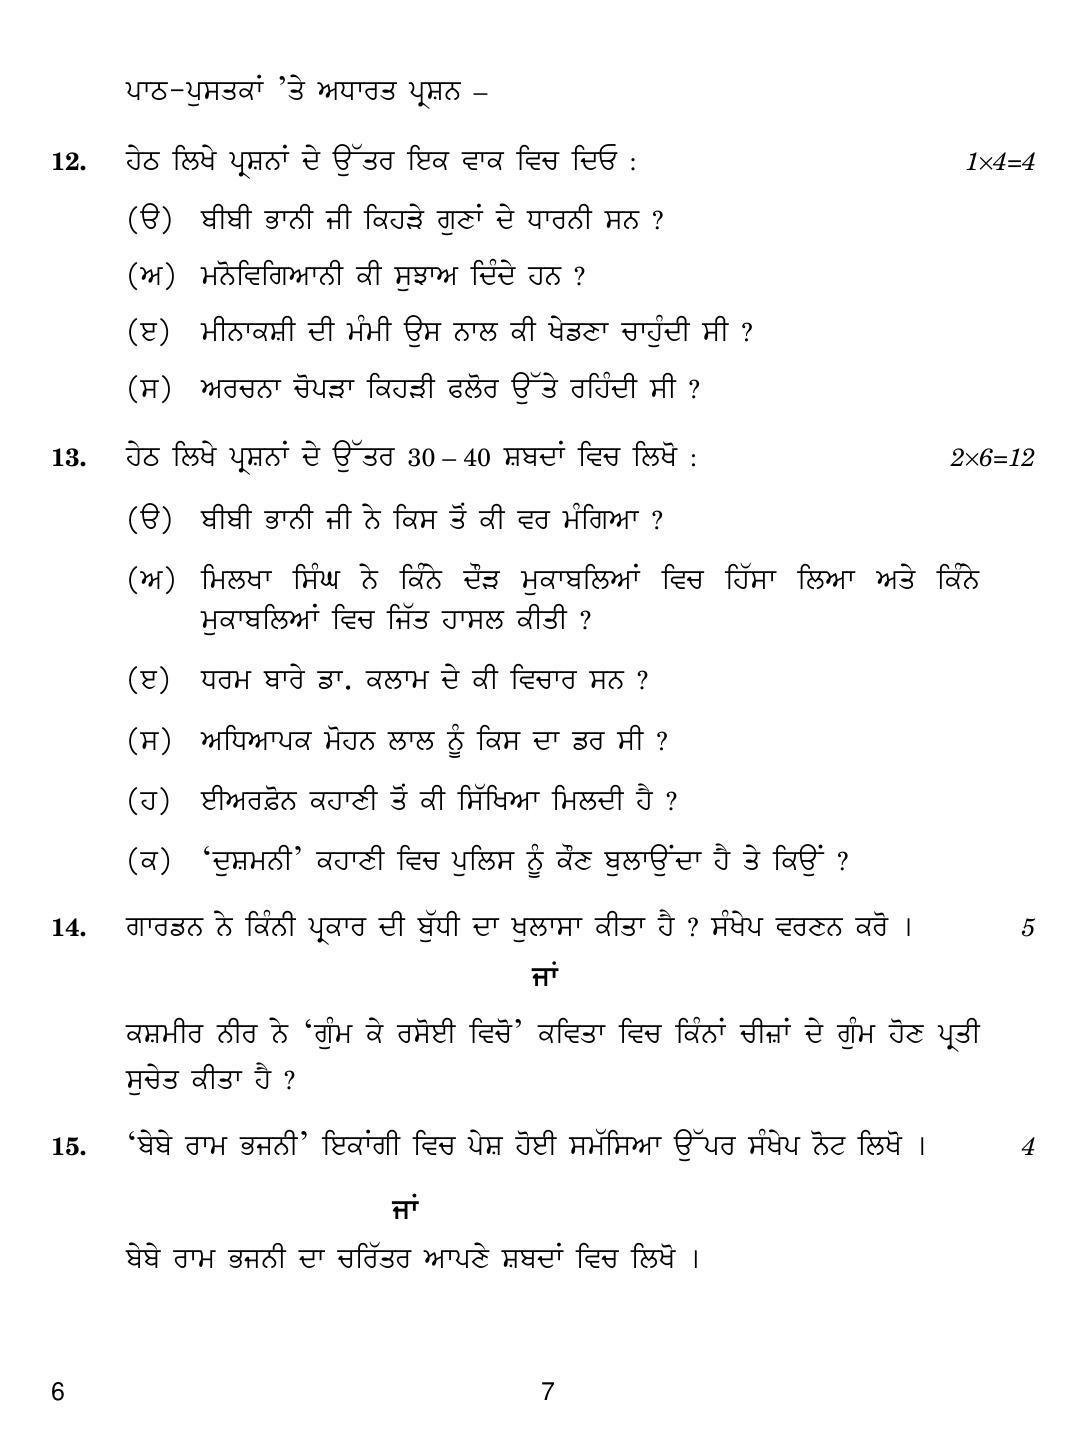 CBSE Class 10 6 Punjabi 2019 Compartment Question Paper - Page 7